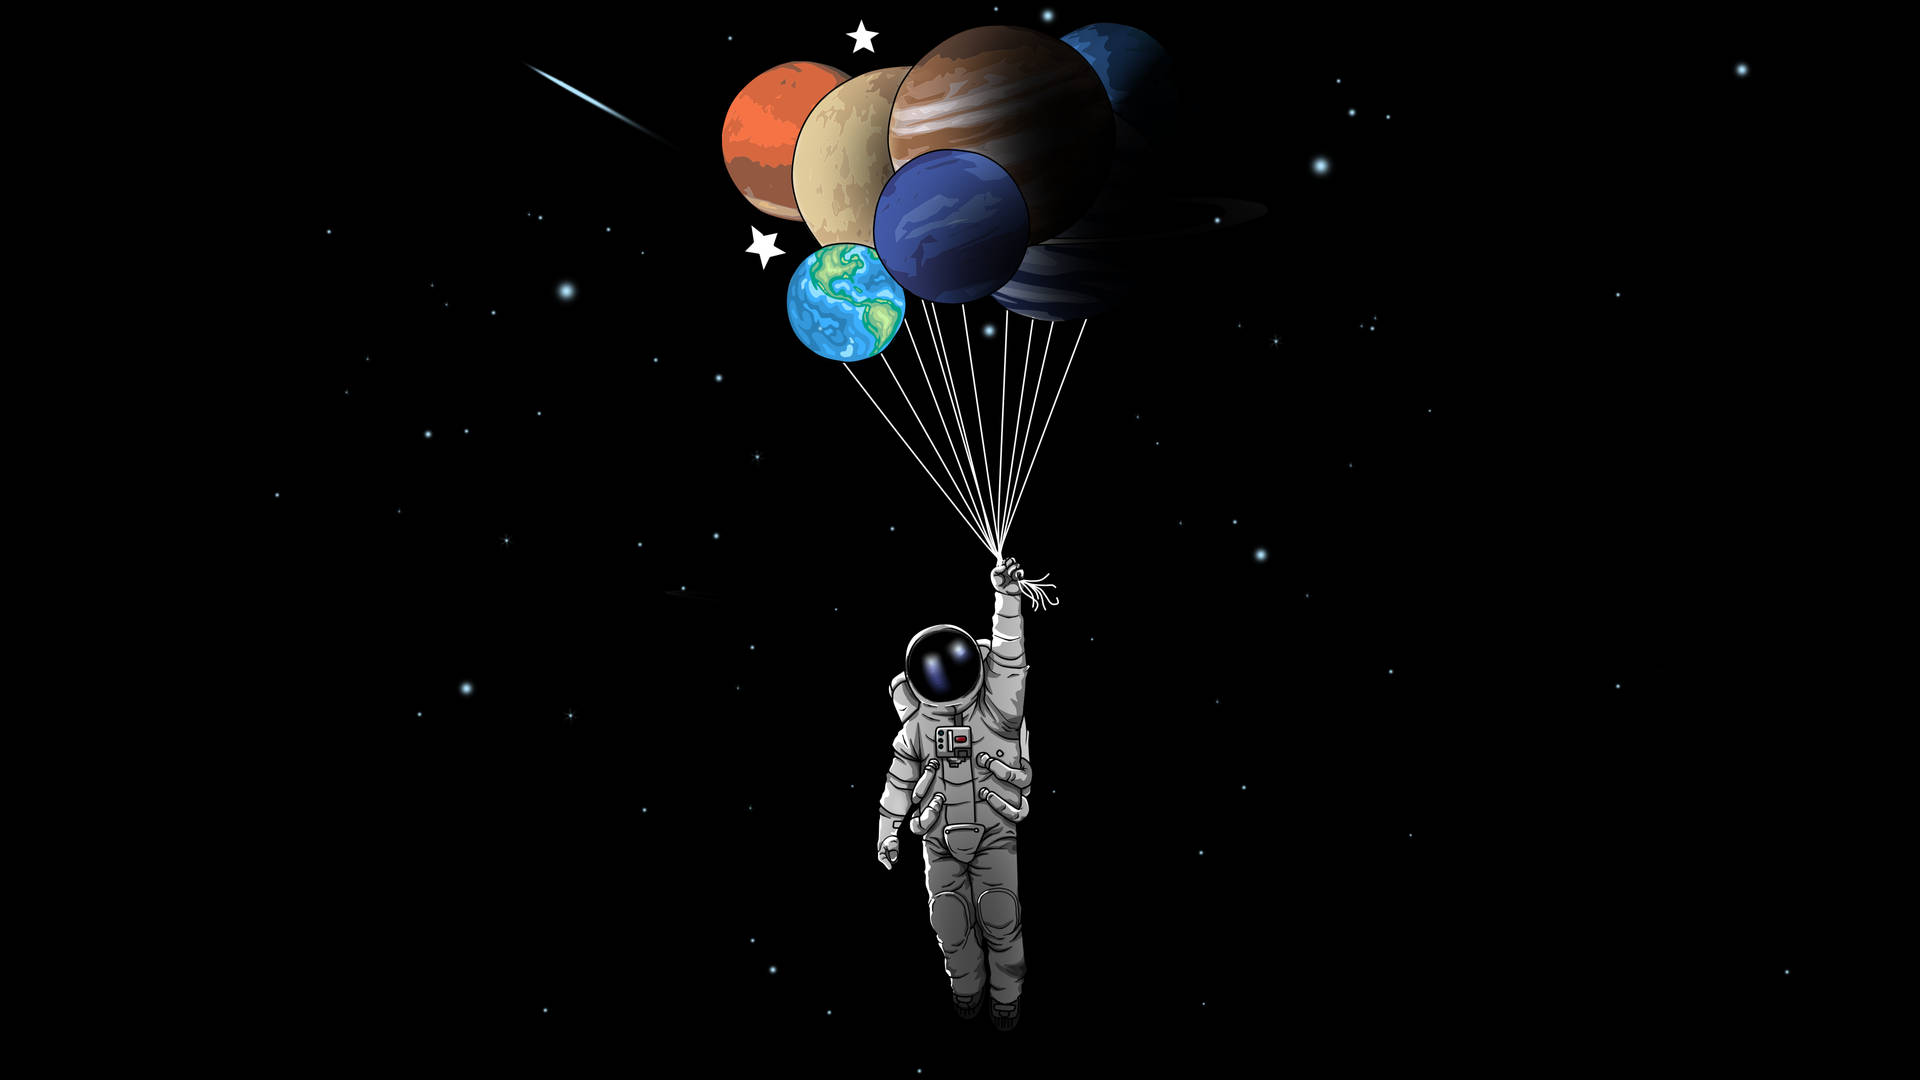 4kastronaut Mit Planetenballons Wallpaper